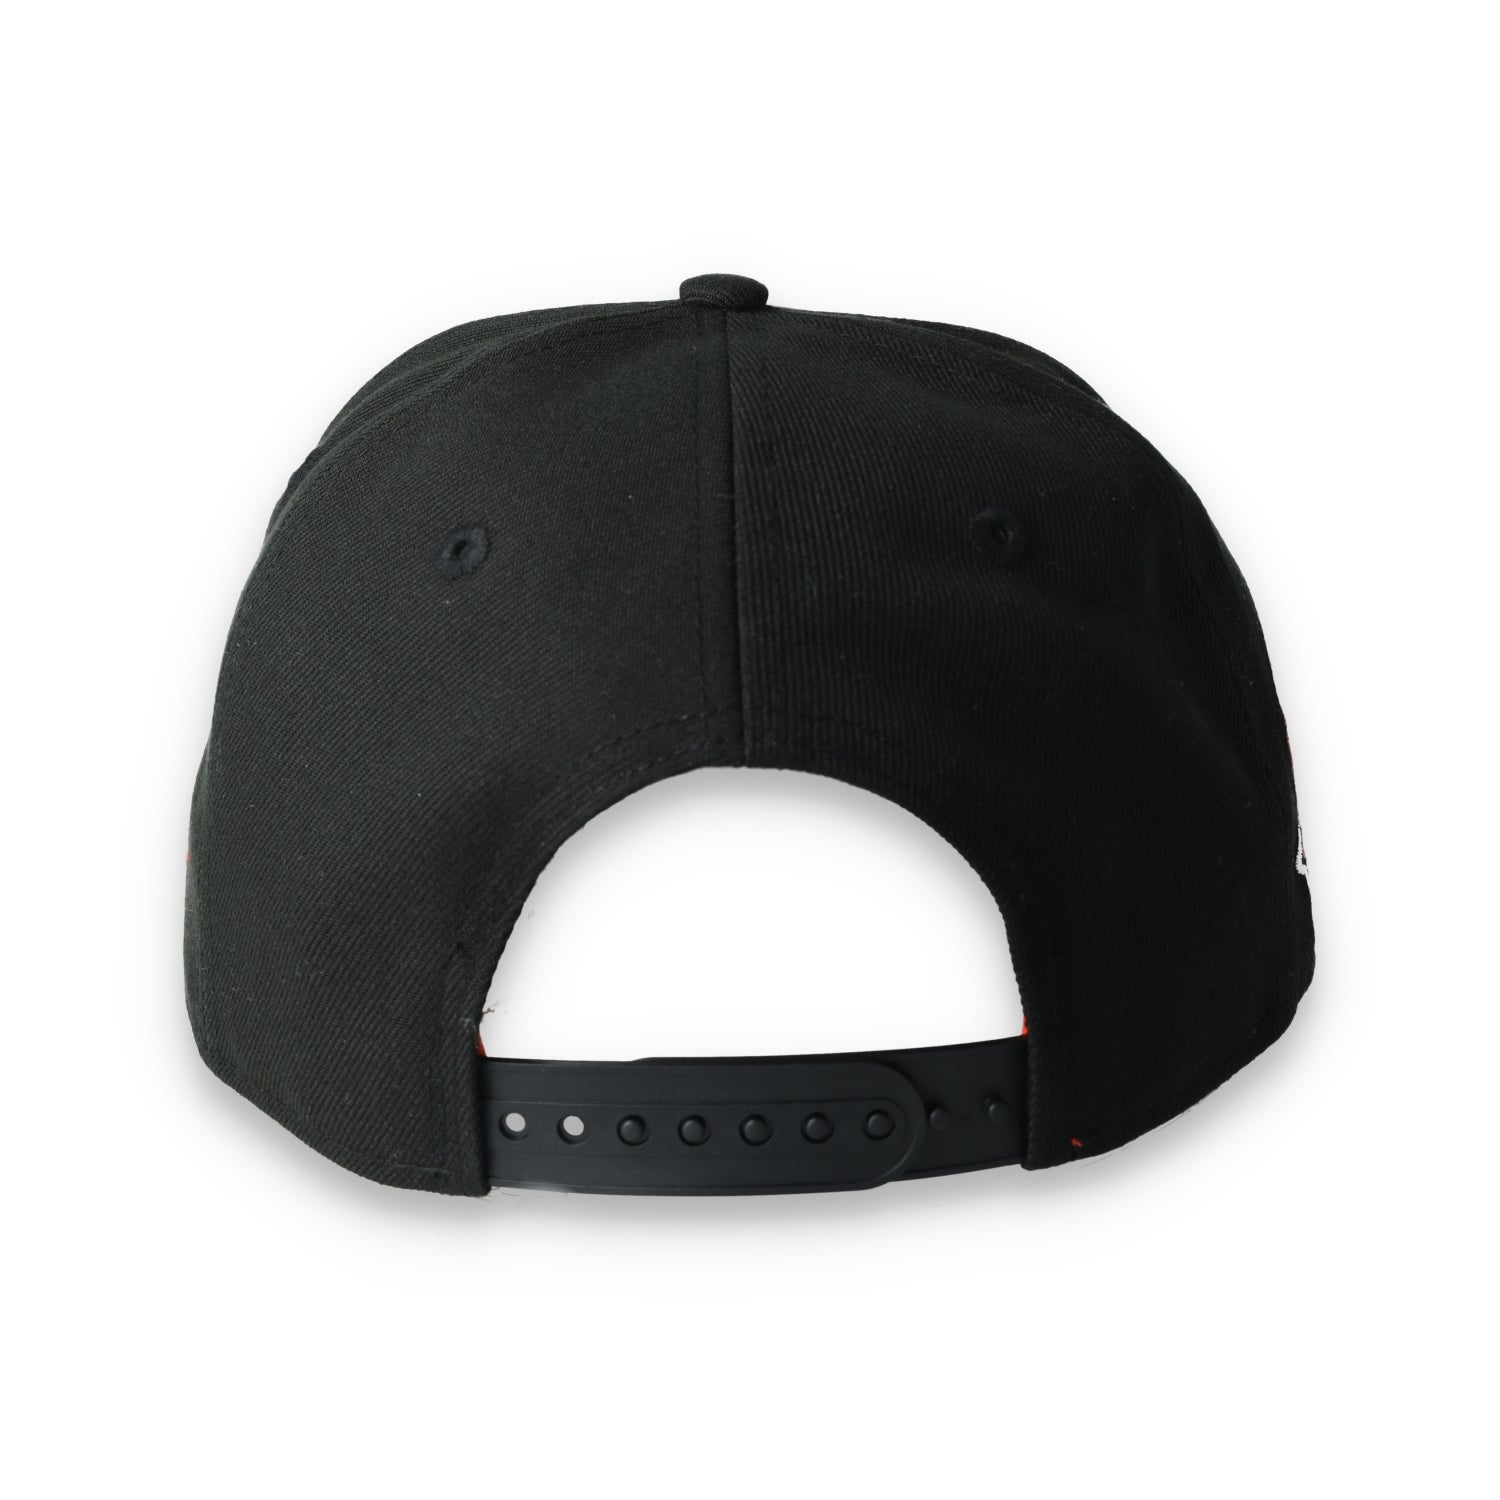 New Era San Francisco Giants Patch E3 9FIFTY Snapback Hat